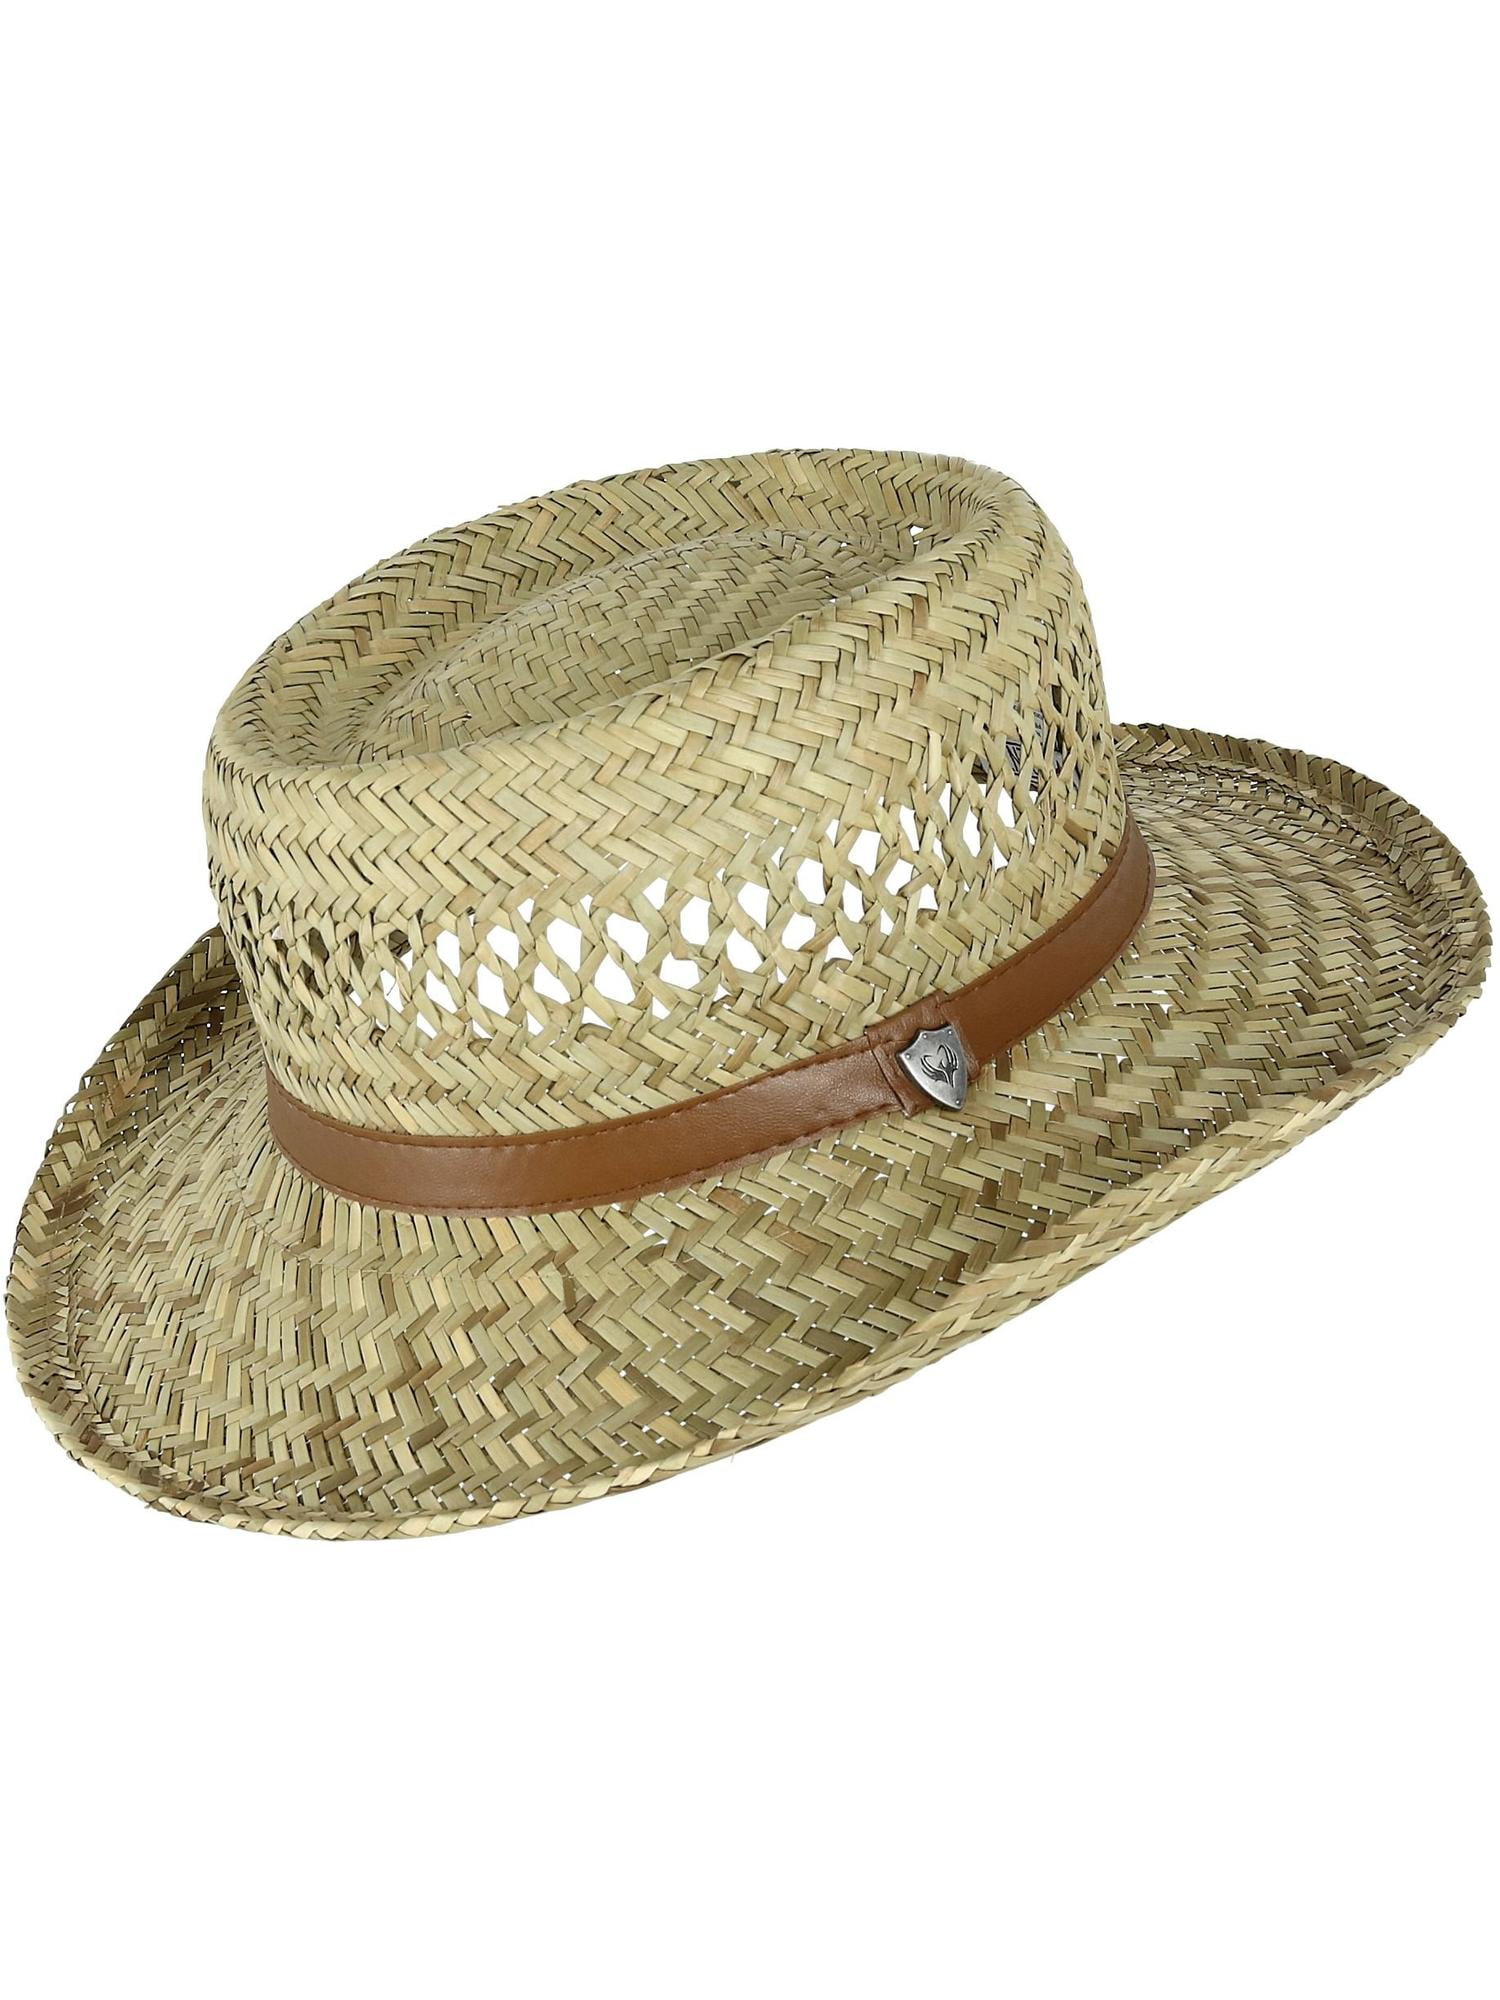 Women Vintage Boater Straw Hat Wide Brim Beach Hats for Men